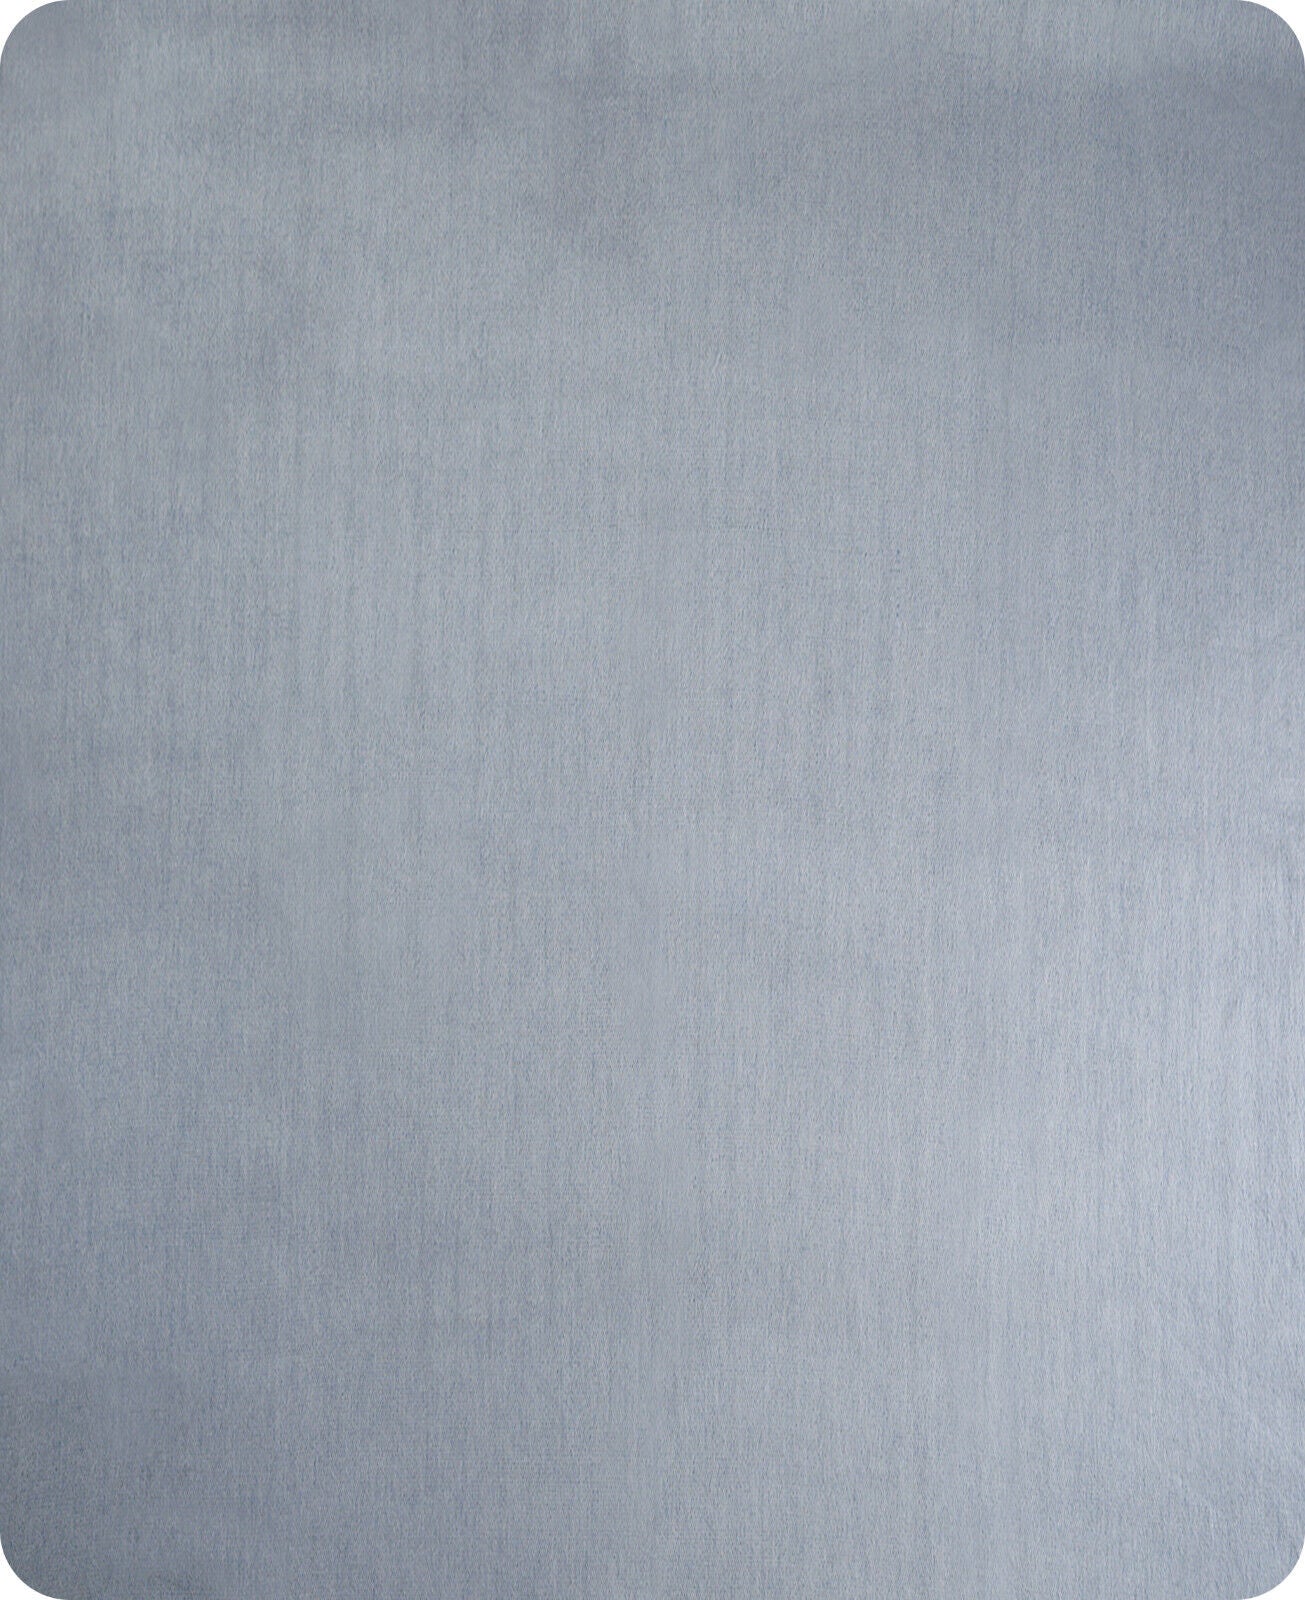 Pantoja - Baby Alpaca Wool Reversible Throw Blanket / Sofa Cover - Queen 98" x 67" - Fringed - Deep Blue/Gray